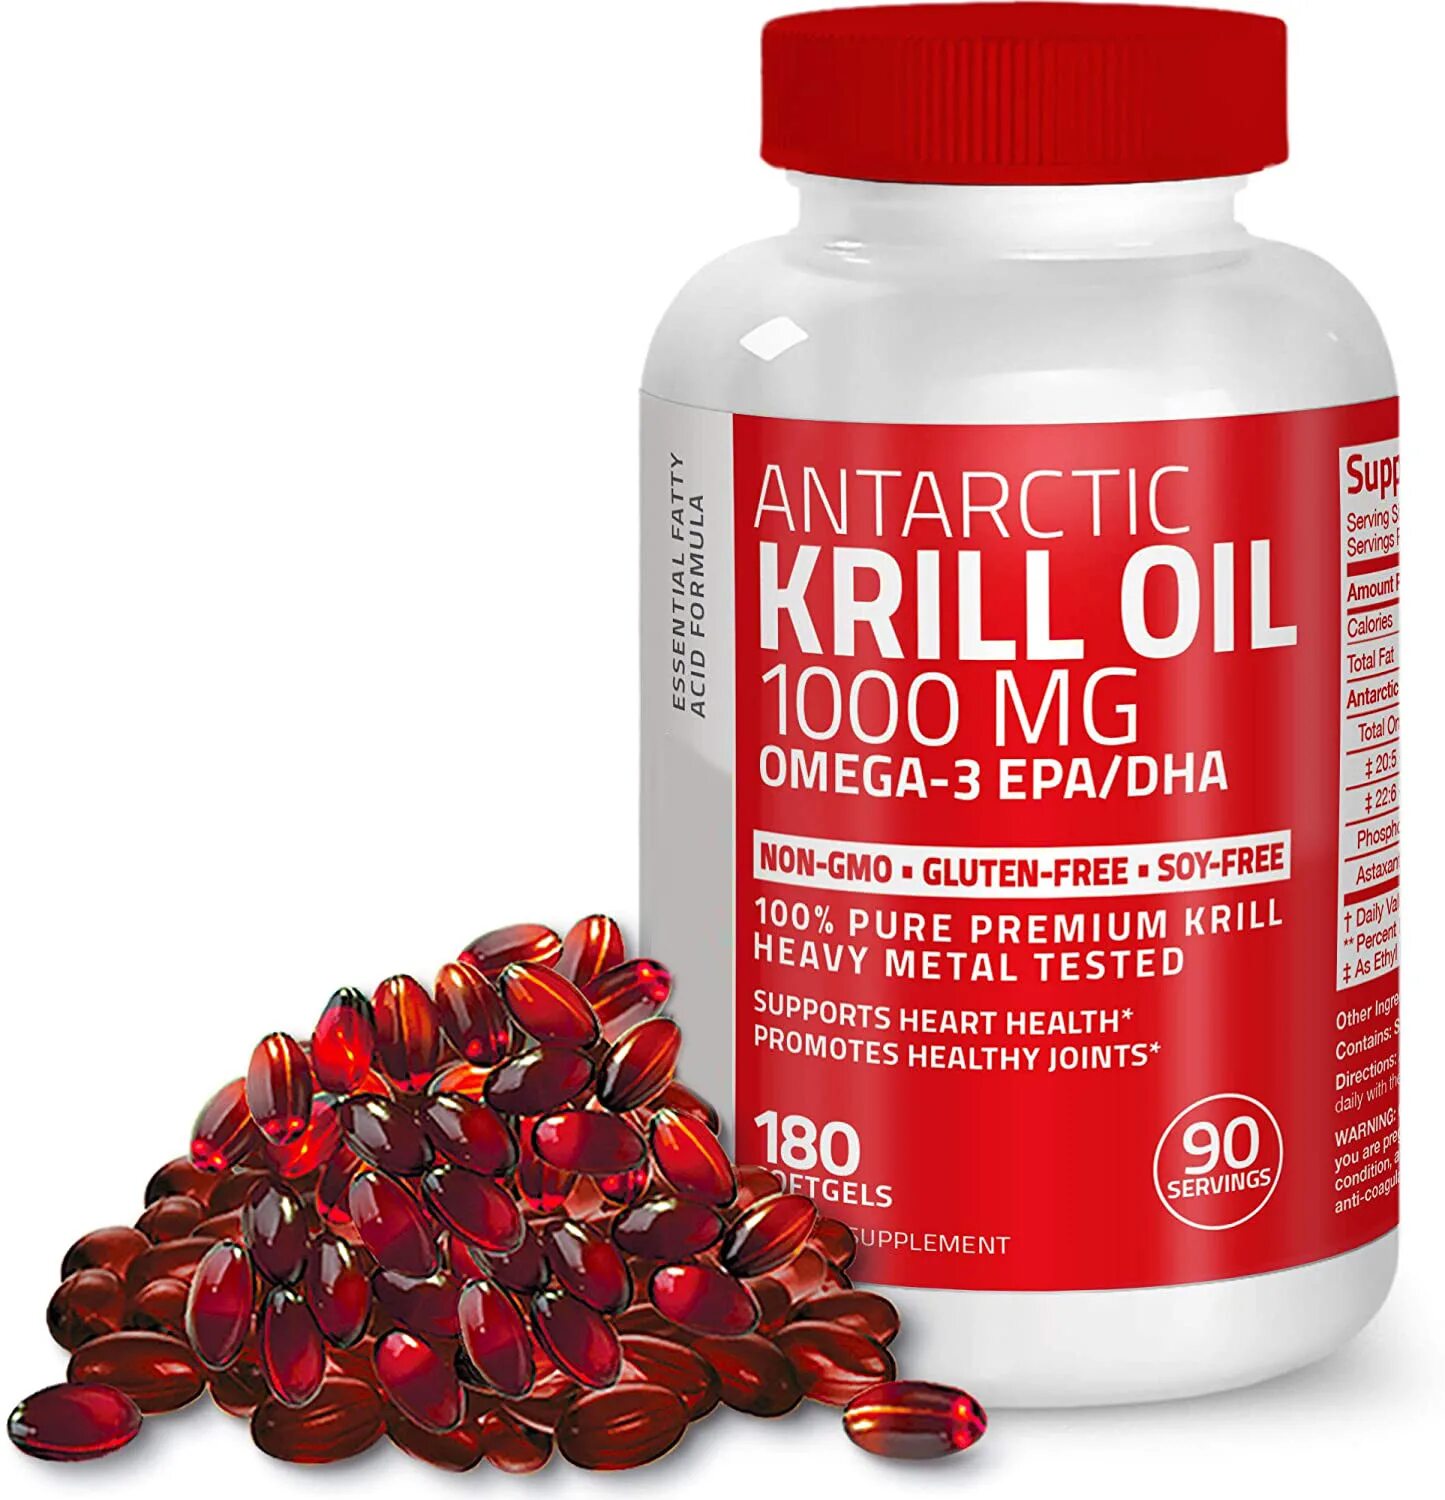 Масло криля капсулы. Krill Oil Omega 3. Antarctic Krill Oil 1000mg. Омега 3 DHA EPA 1000 мг. Krill Oil капсулы.